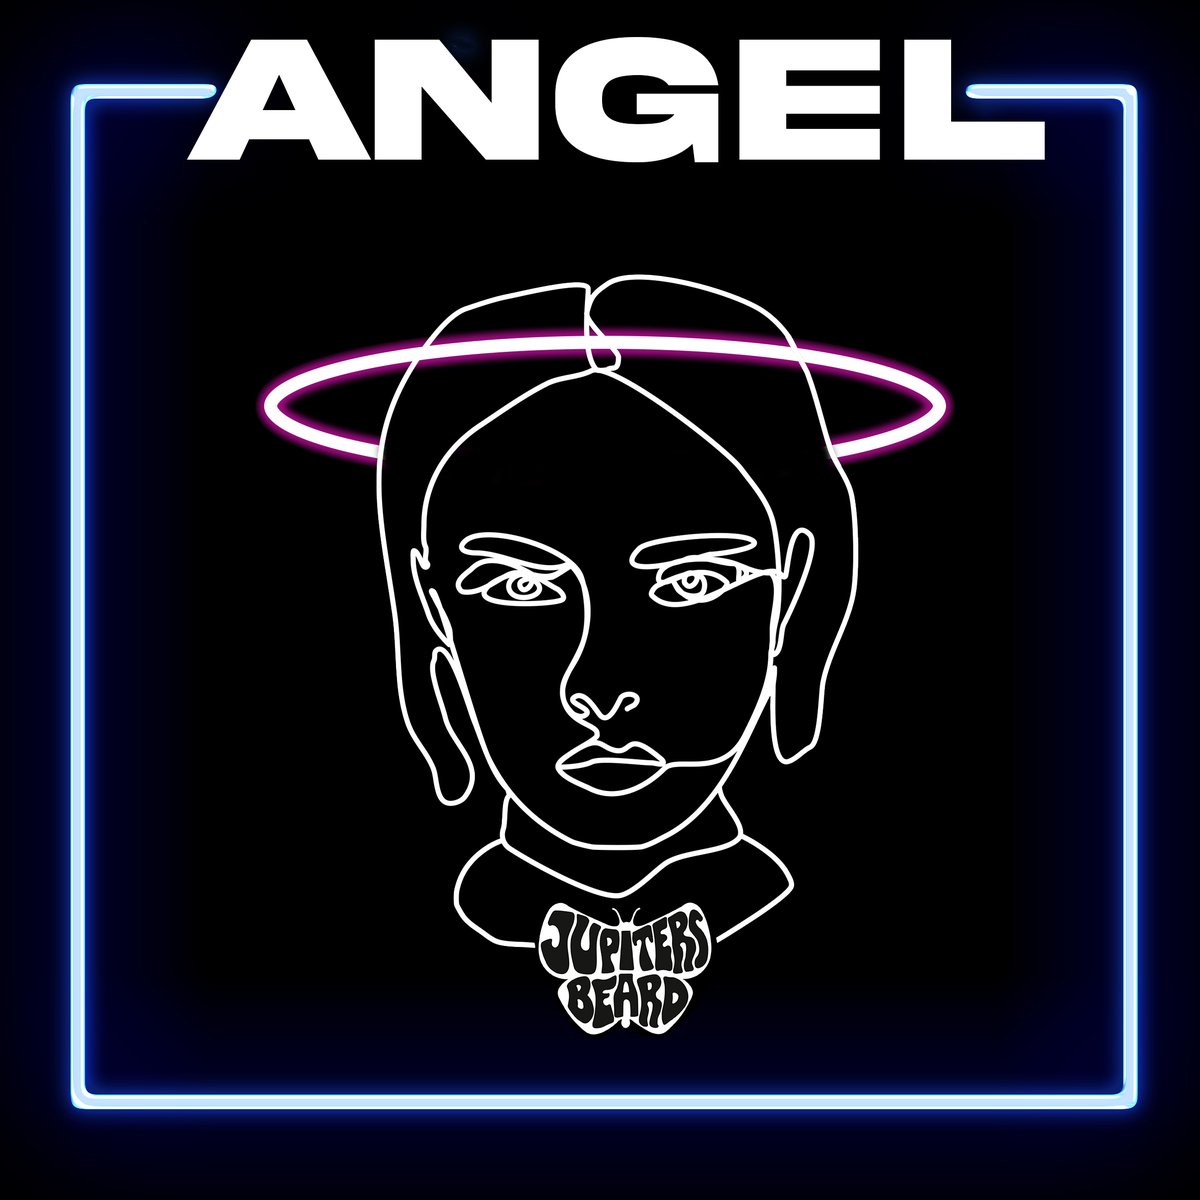 ▂▂▂▂▂▂▂▂▂▂▂▂▂▂ #TheWelcomeShow #191 PREMIERE 🔊 @jupitersbearduk - ANGEL Brand new single released MAY 10. 2021 🌐 jupitersbeard.co.uk 📸 instagram.com/jupitersbeardo… on #🆁🅺🅲 📻 radiokc.fm ▂▂▂▂▂▂▂▂▂▂▂▂▂▂